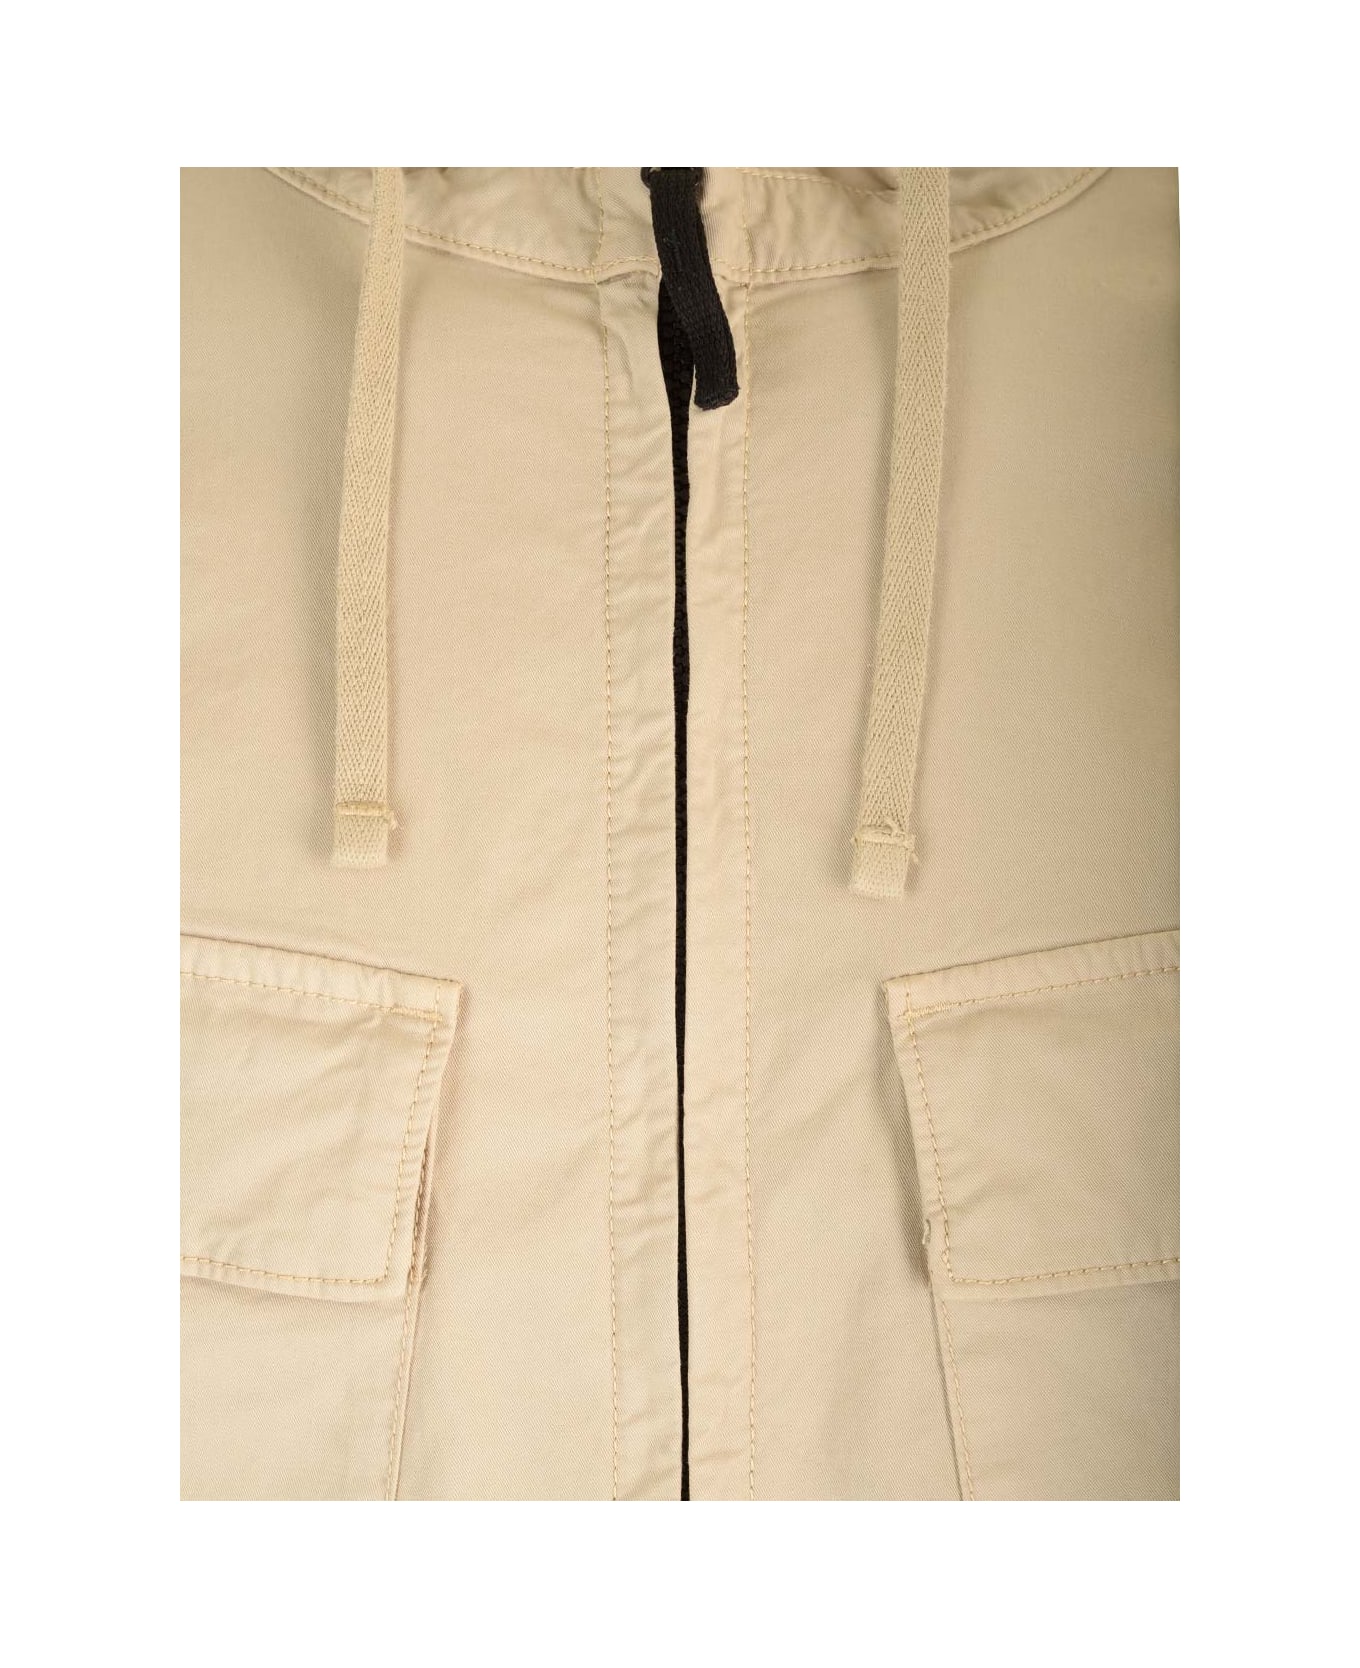 Stone Island Supima Cotton Twill Stretch-tc Jacket - Nude & Neutrals コート